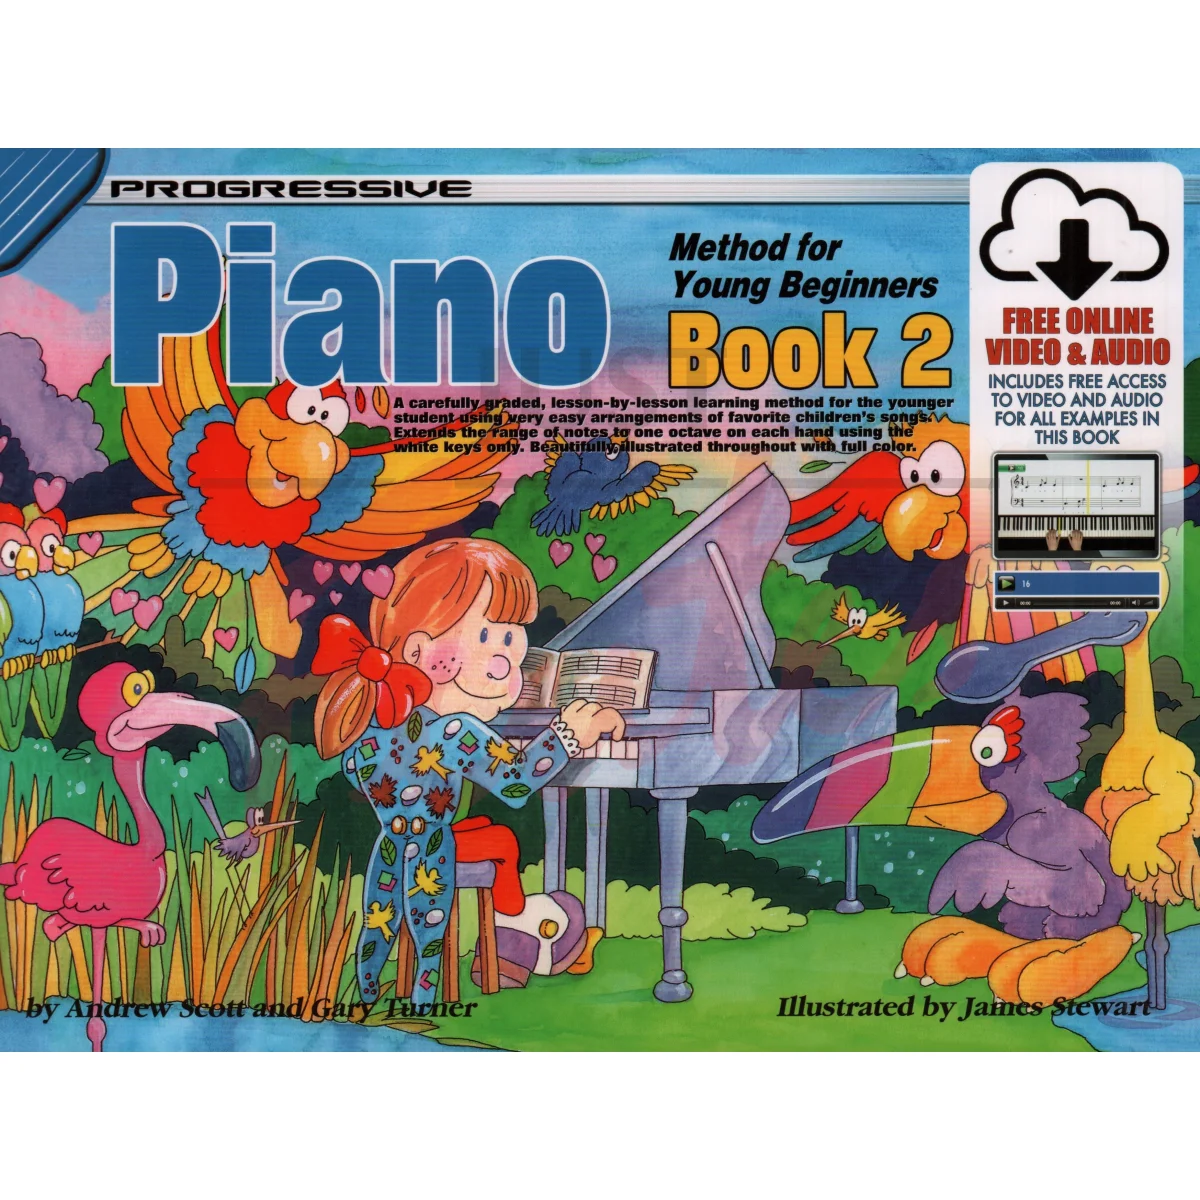 Progressive Piano Method for Young Beginners Book 2